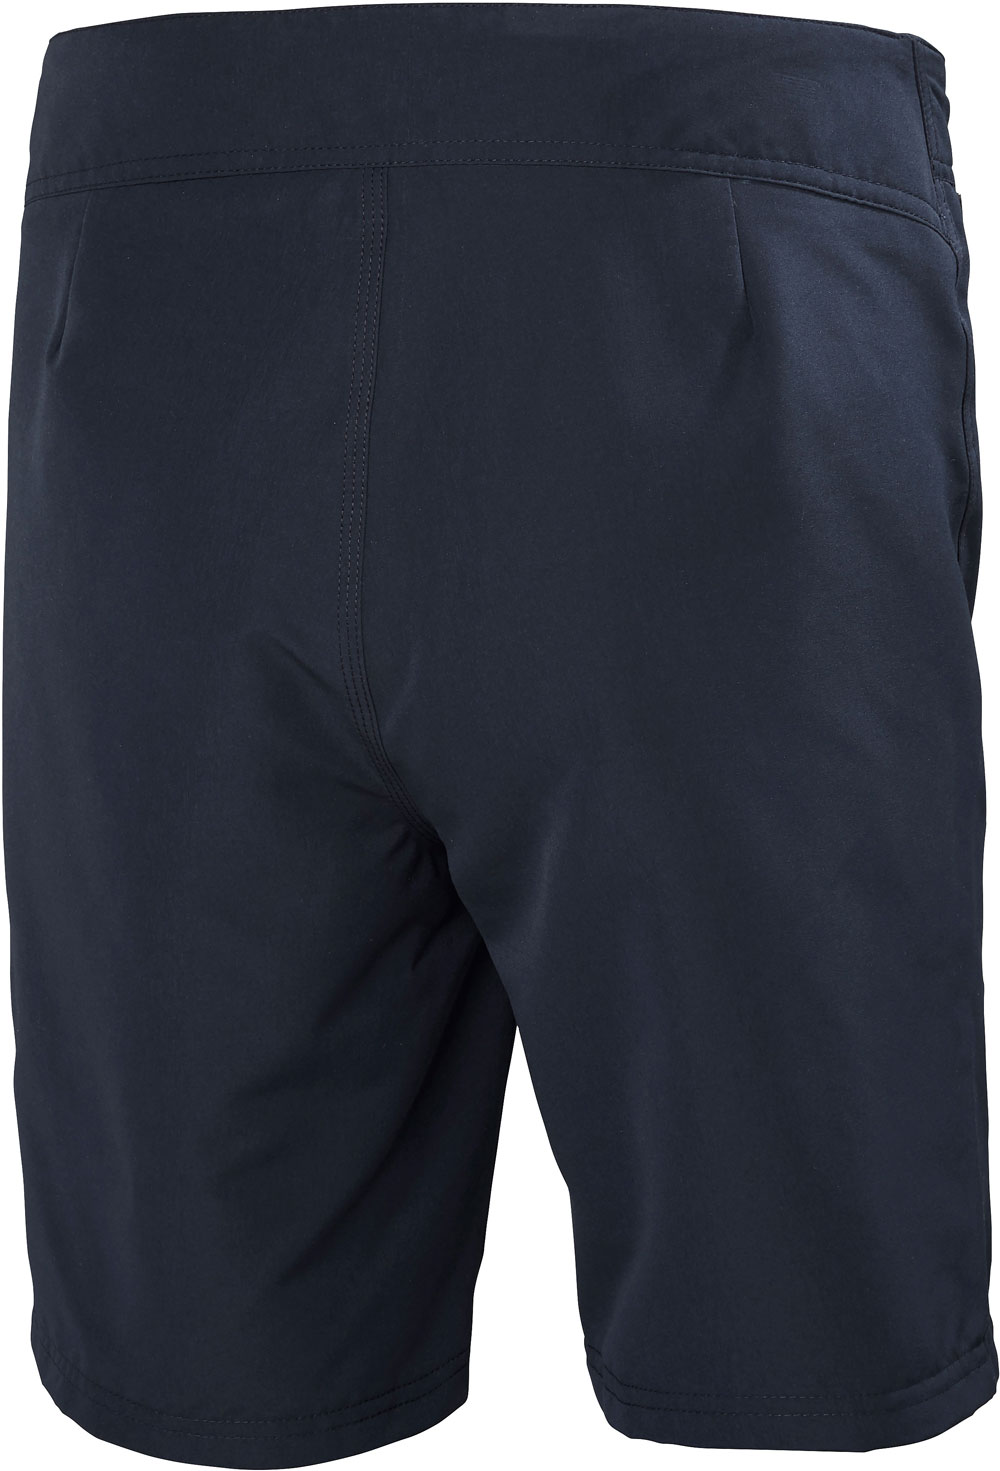 Men's board shorts